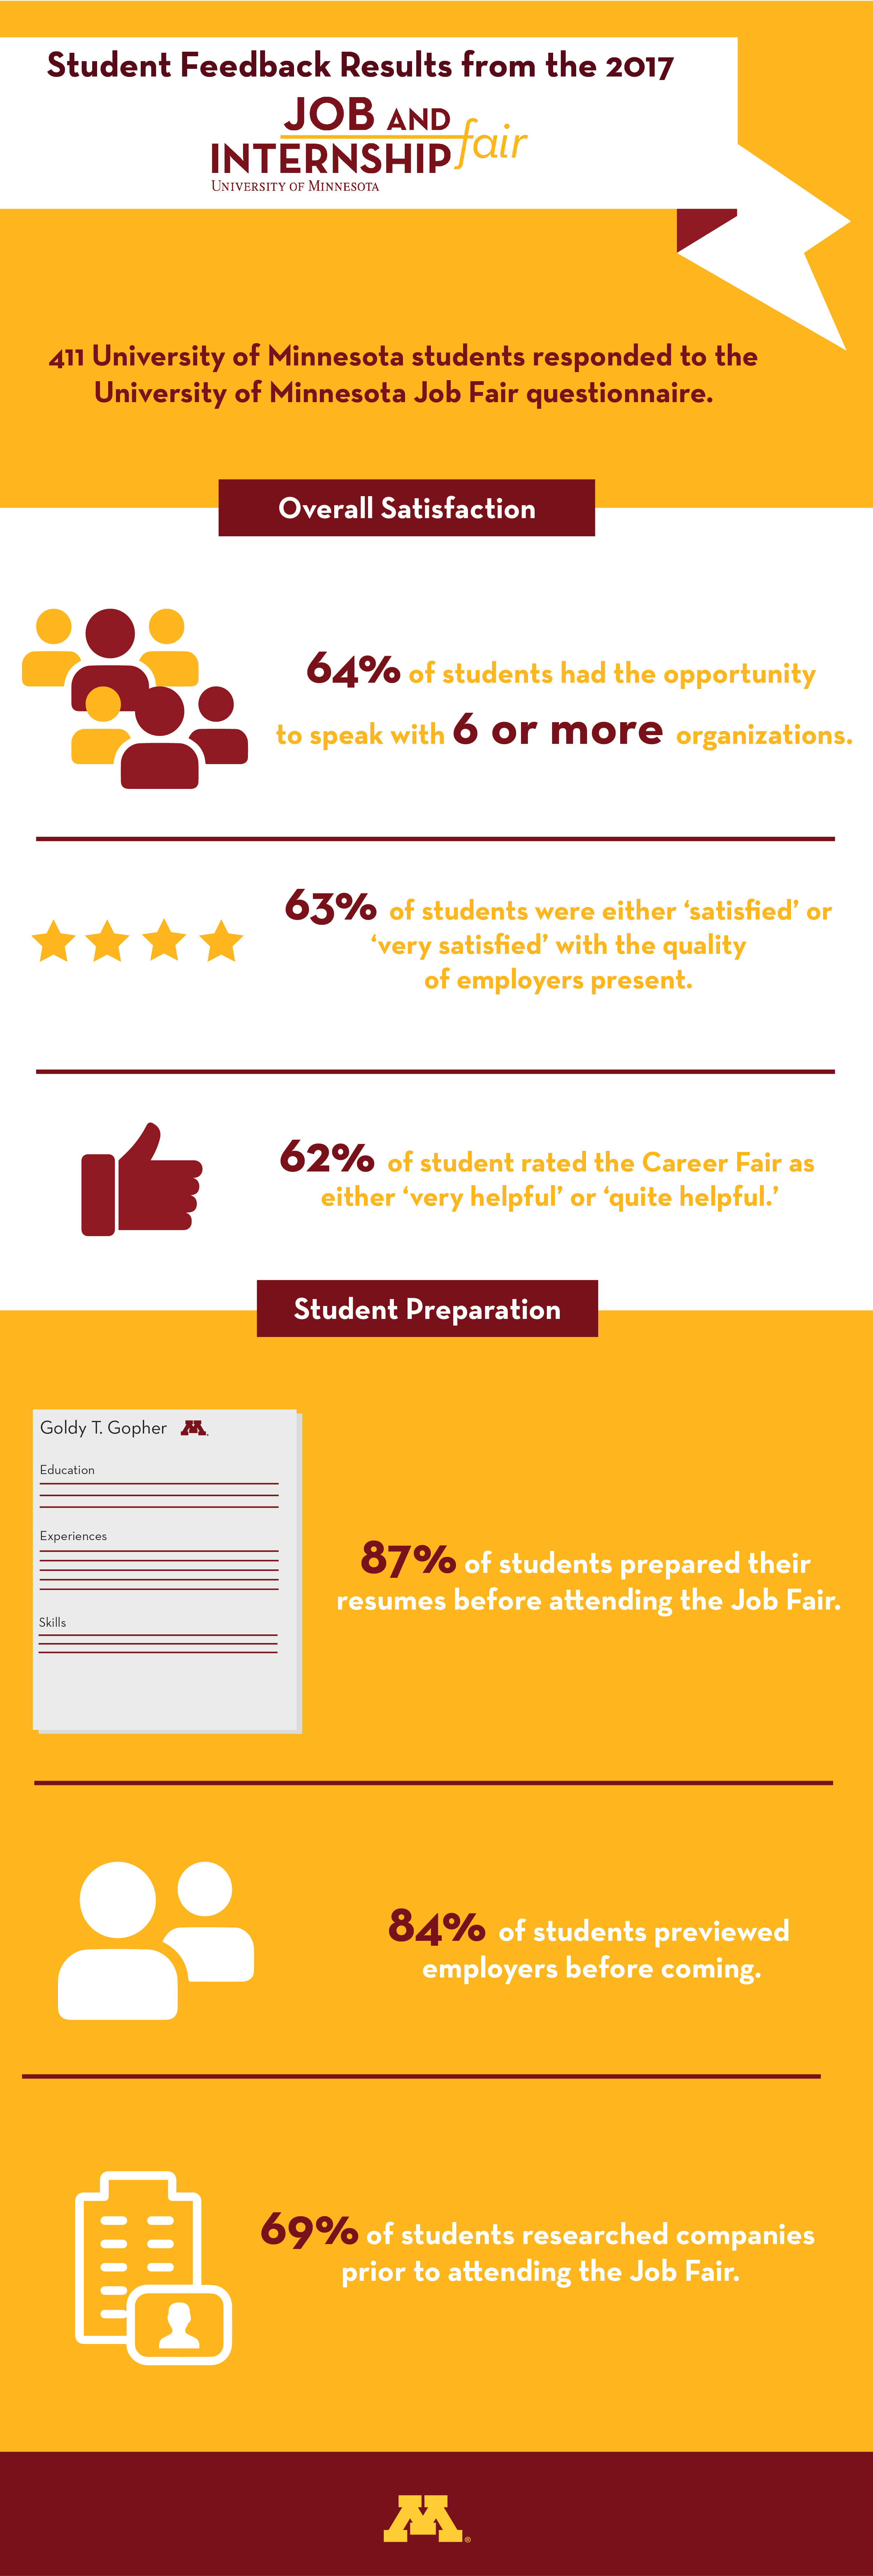 graphic showing student feedback from 2017 University of Minnesota Job and Internship Fair